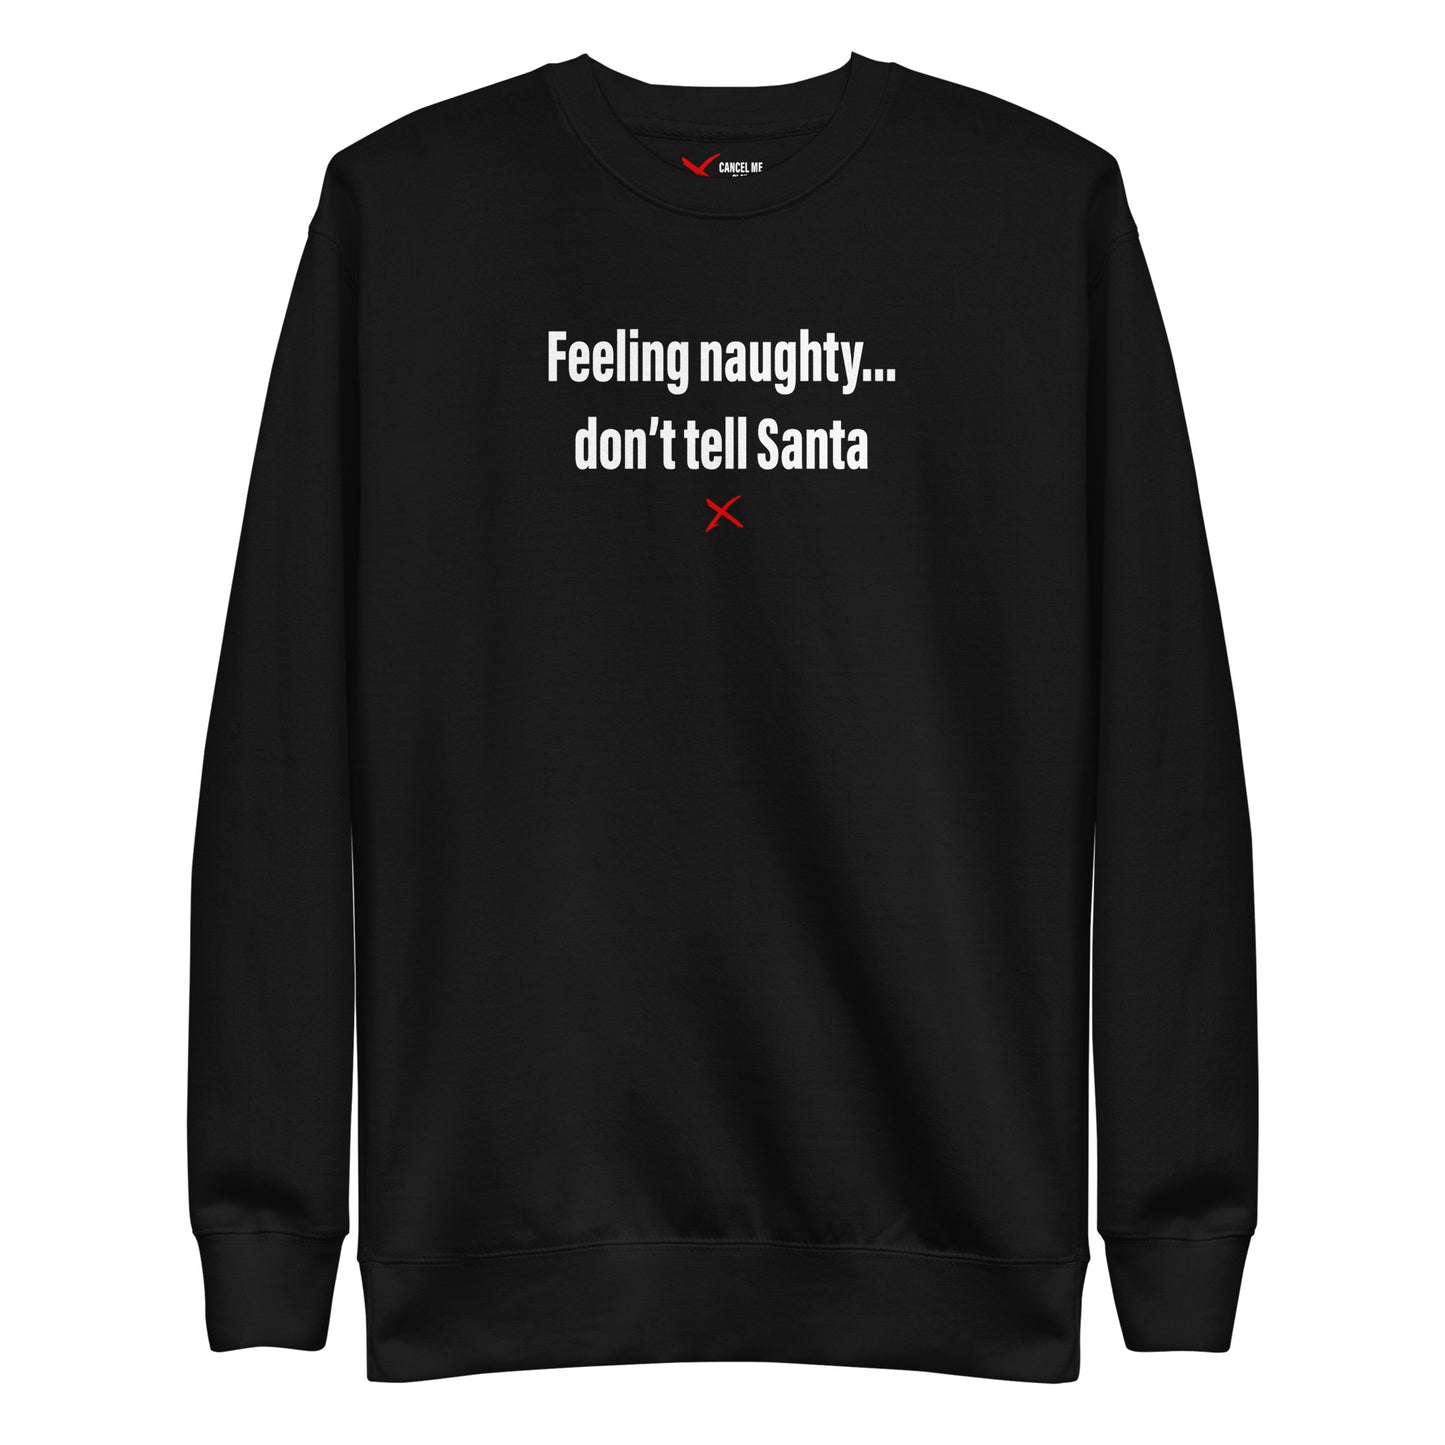 Feeling naughty... don't tell Santa - Sweatshirt